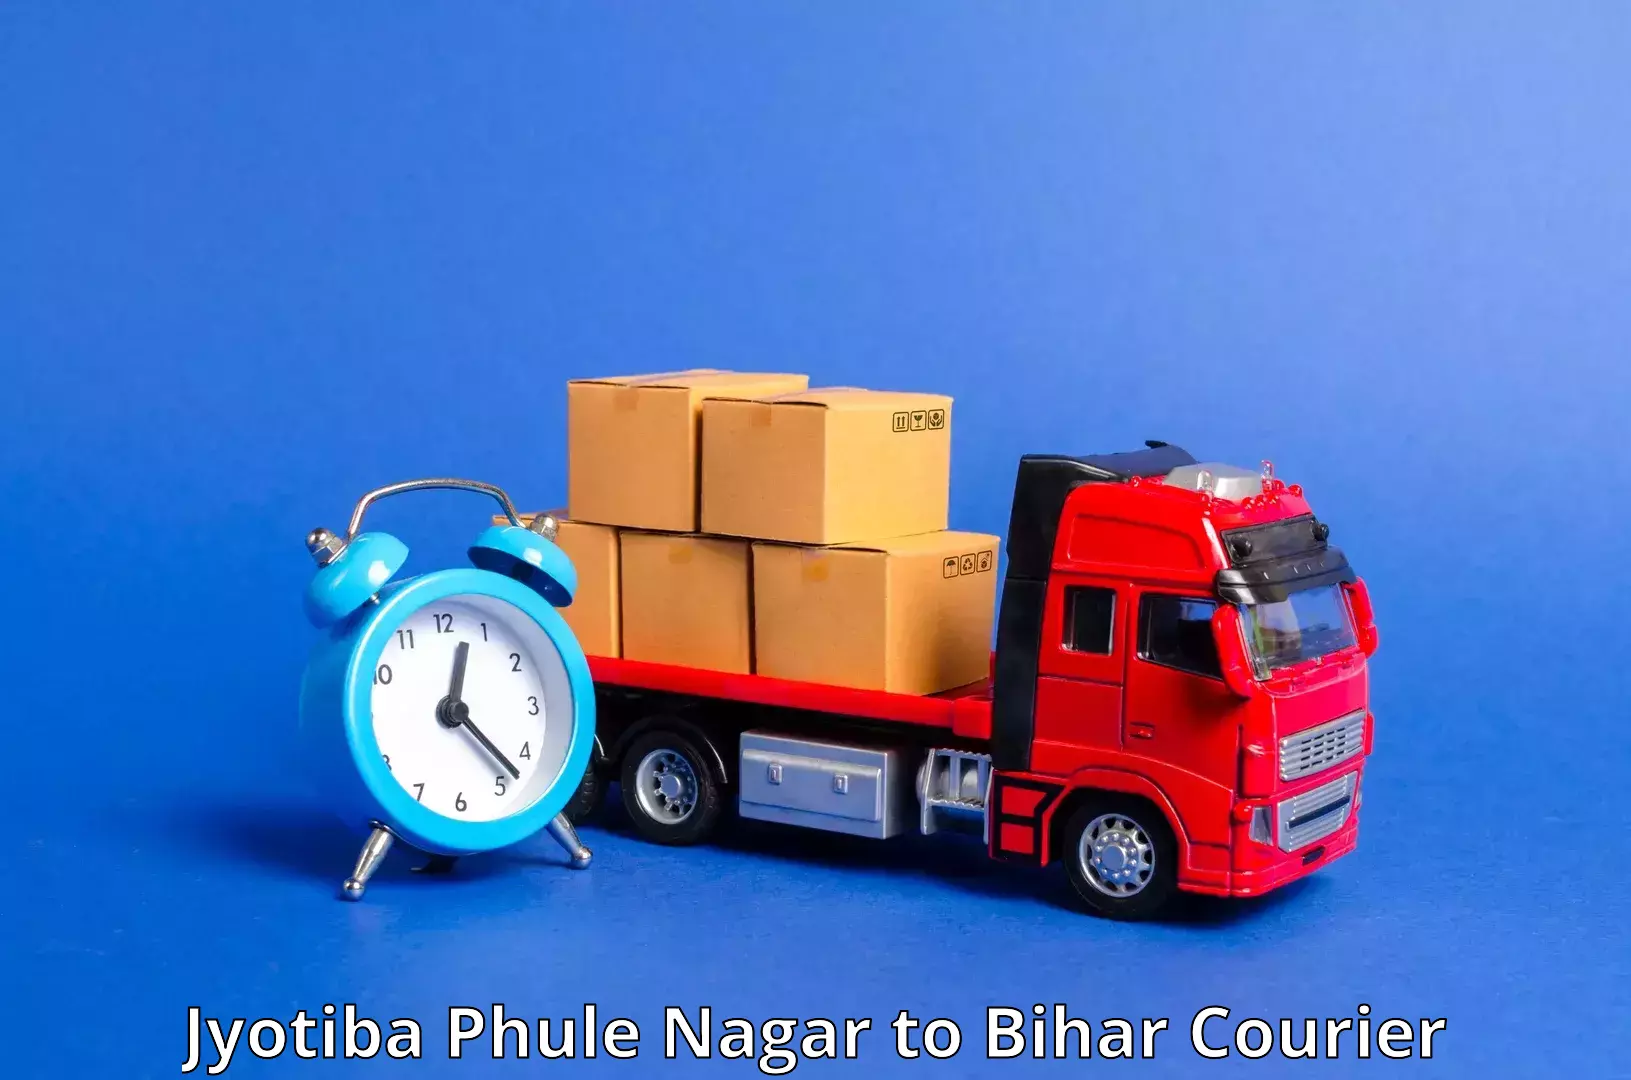 24-hour courier service Jyotiba Phule Nagar to Bhojpur